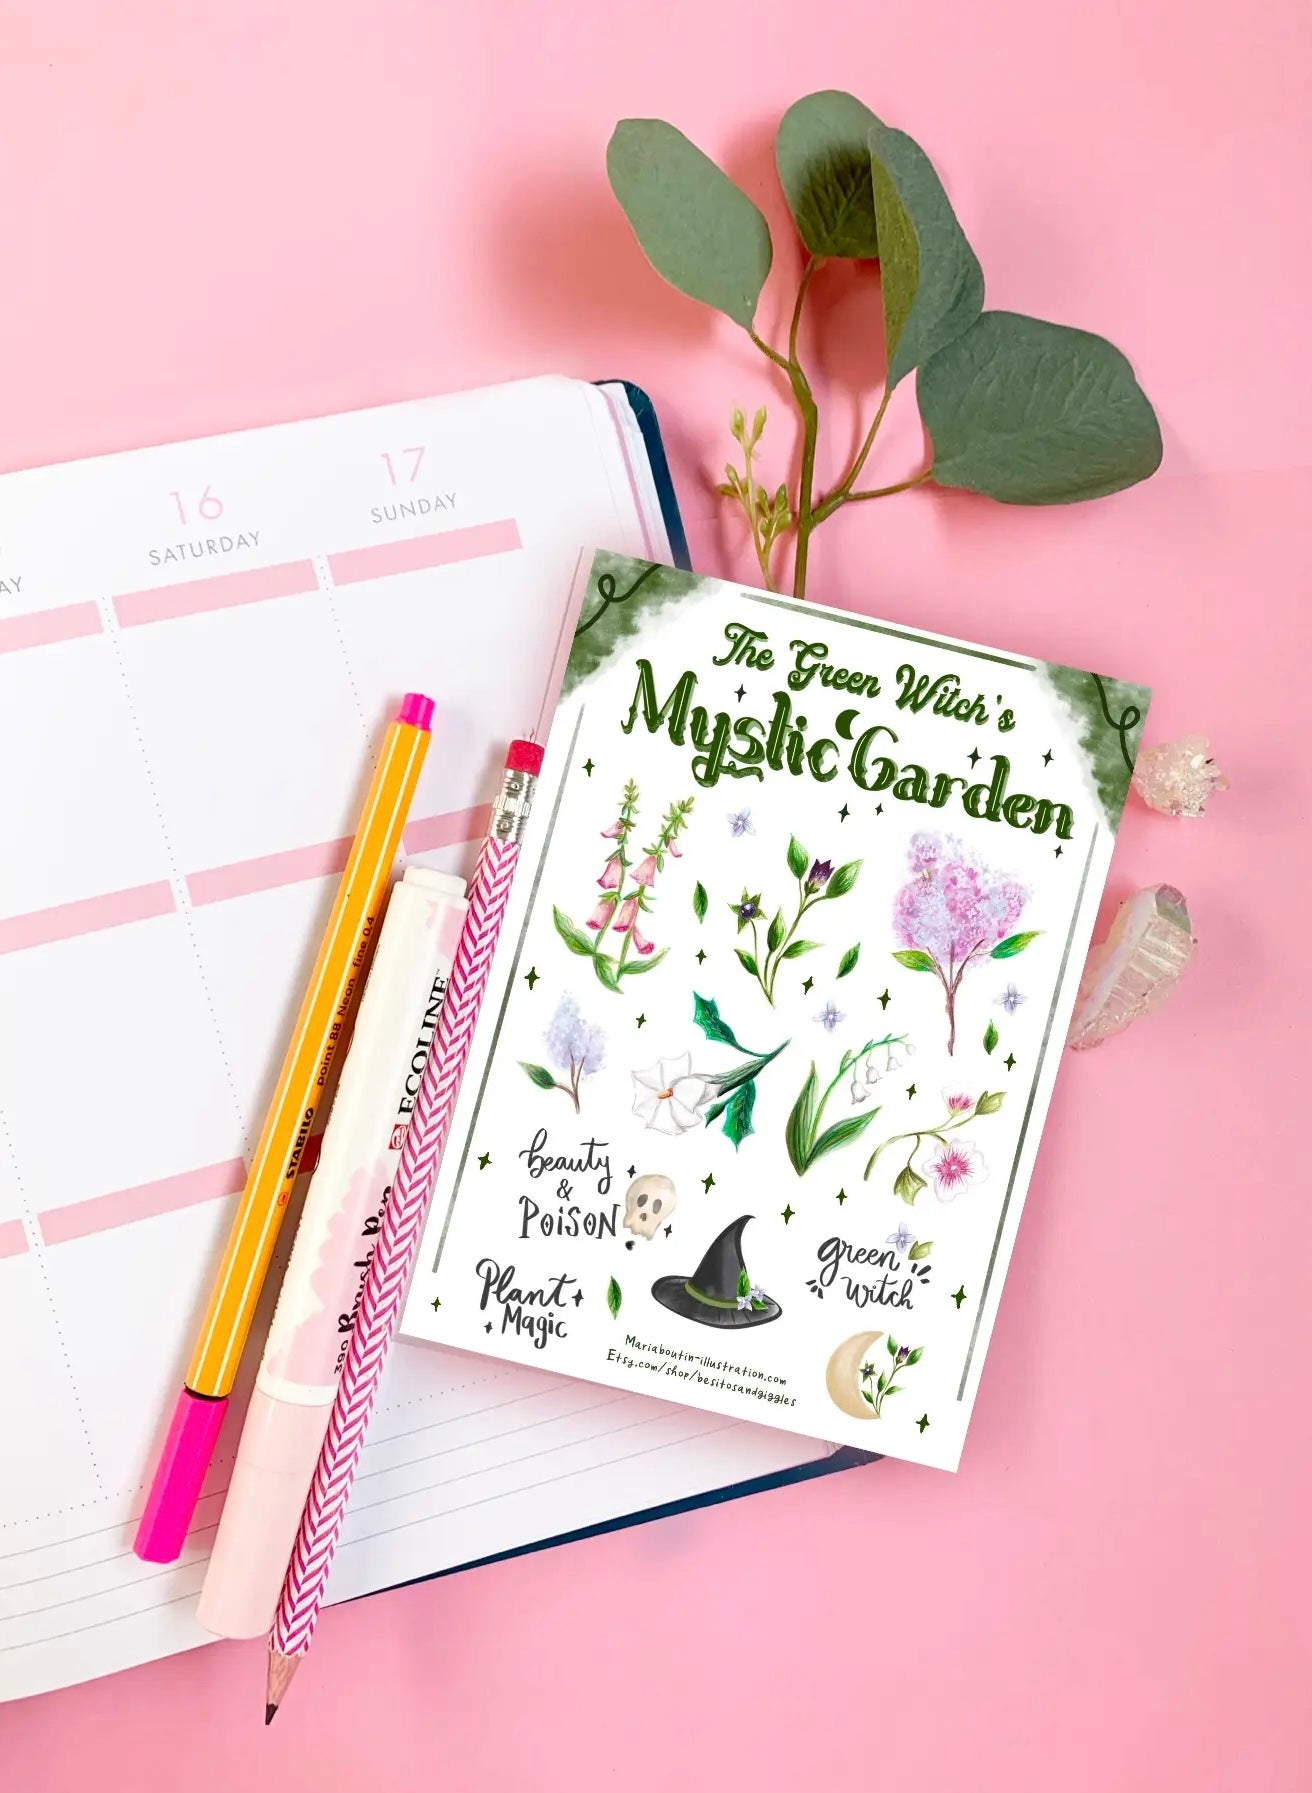 Green Witch Mystic Garden Sticker Sheet/Poisonous Flowers